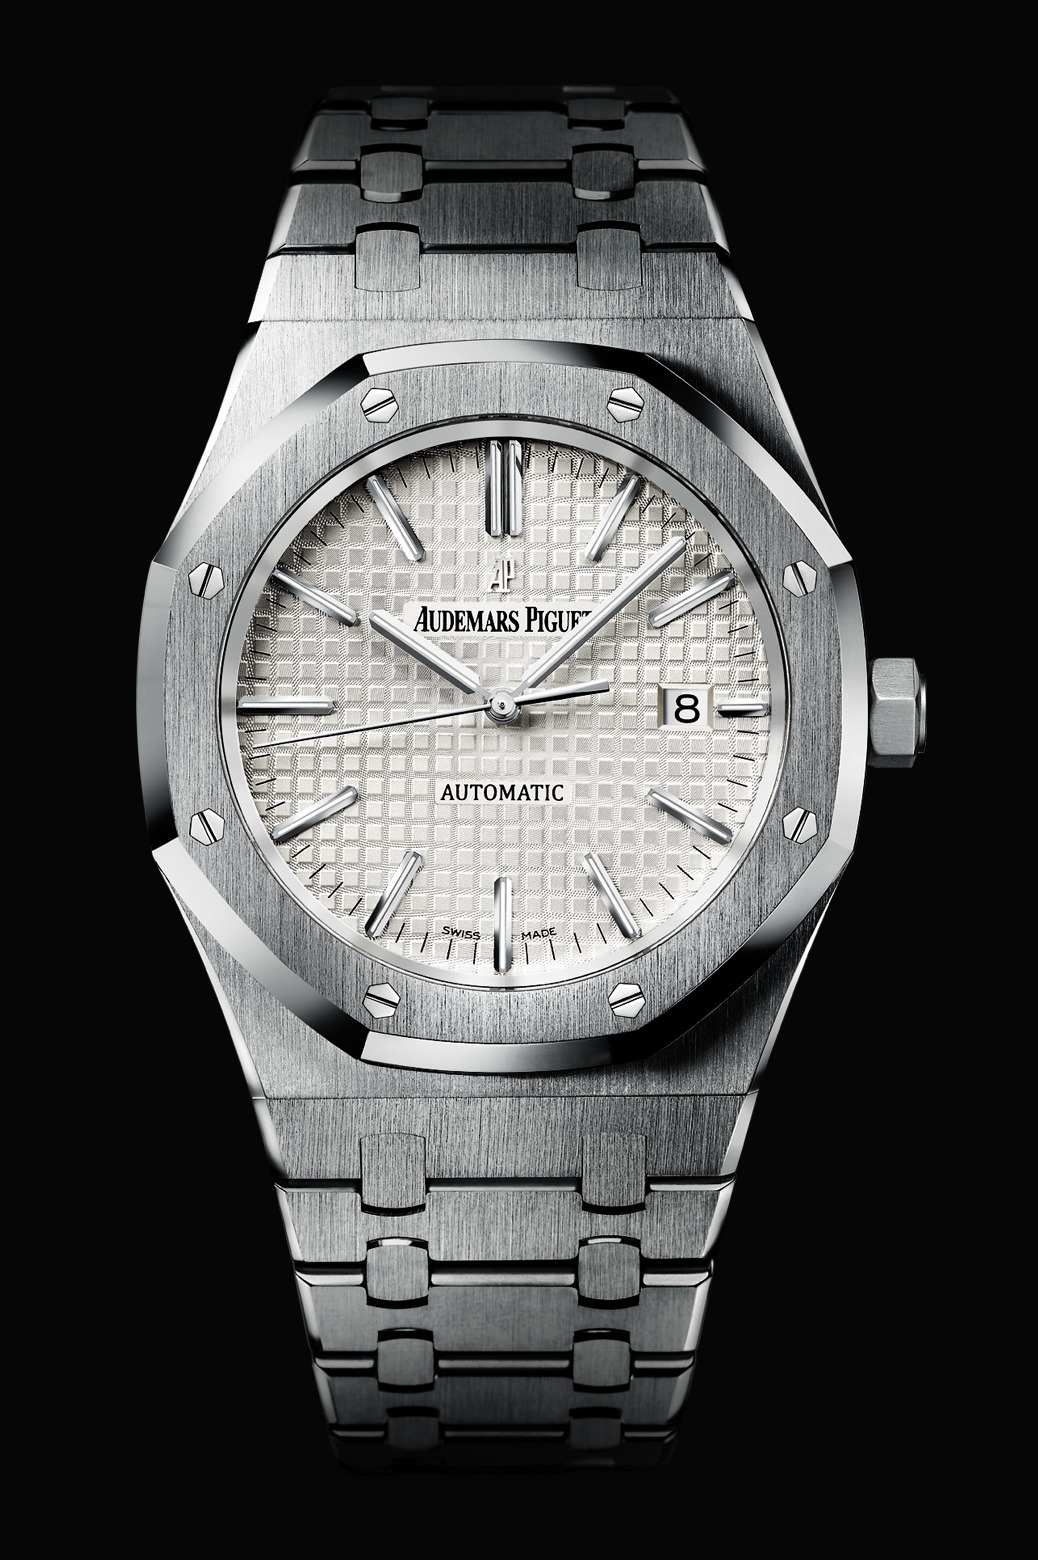 Audemars Piguet Royal Oak Automatic Steel watch REF: 15400ST.OO.1220ST.02